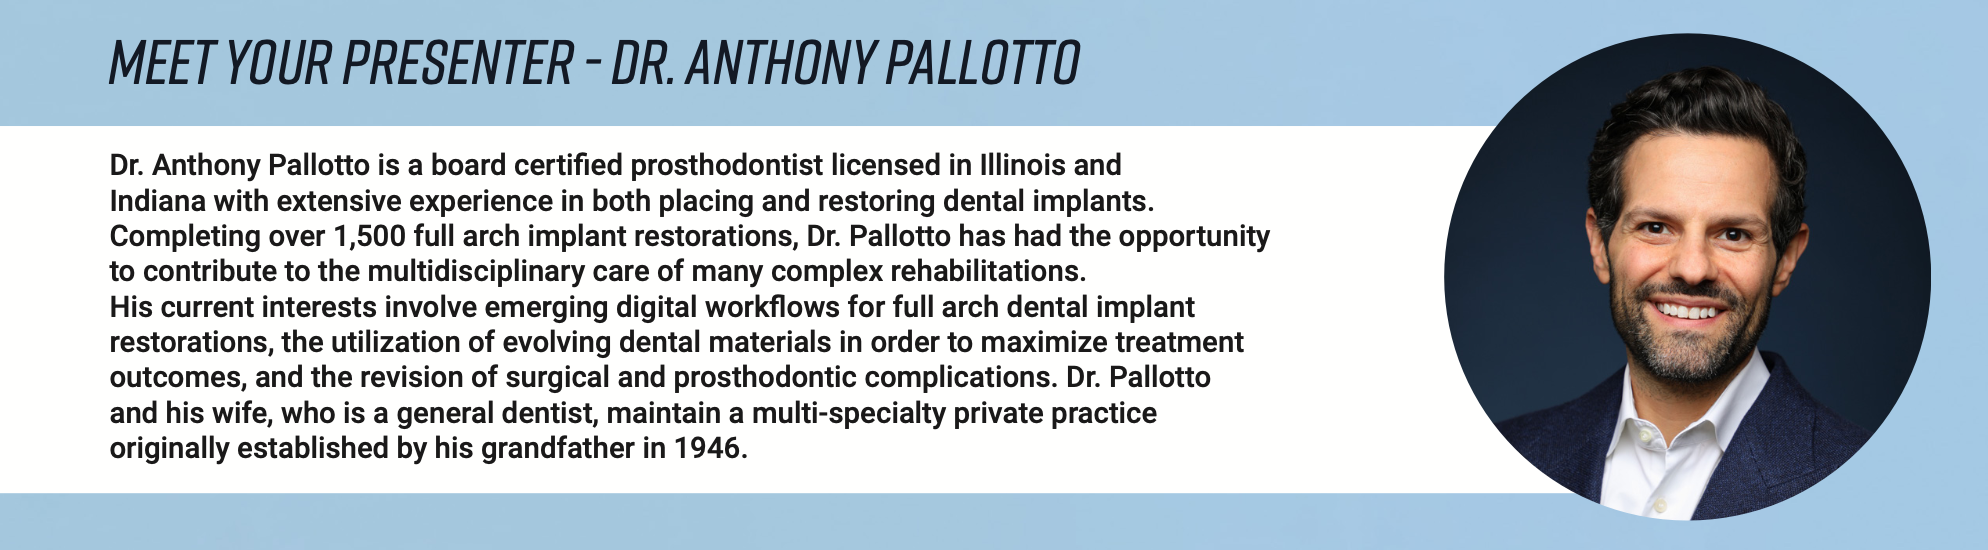 Dr. Anthony Pollatto